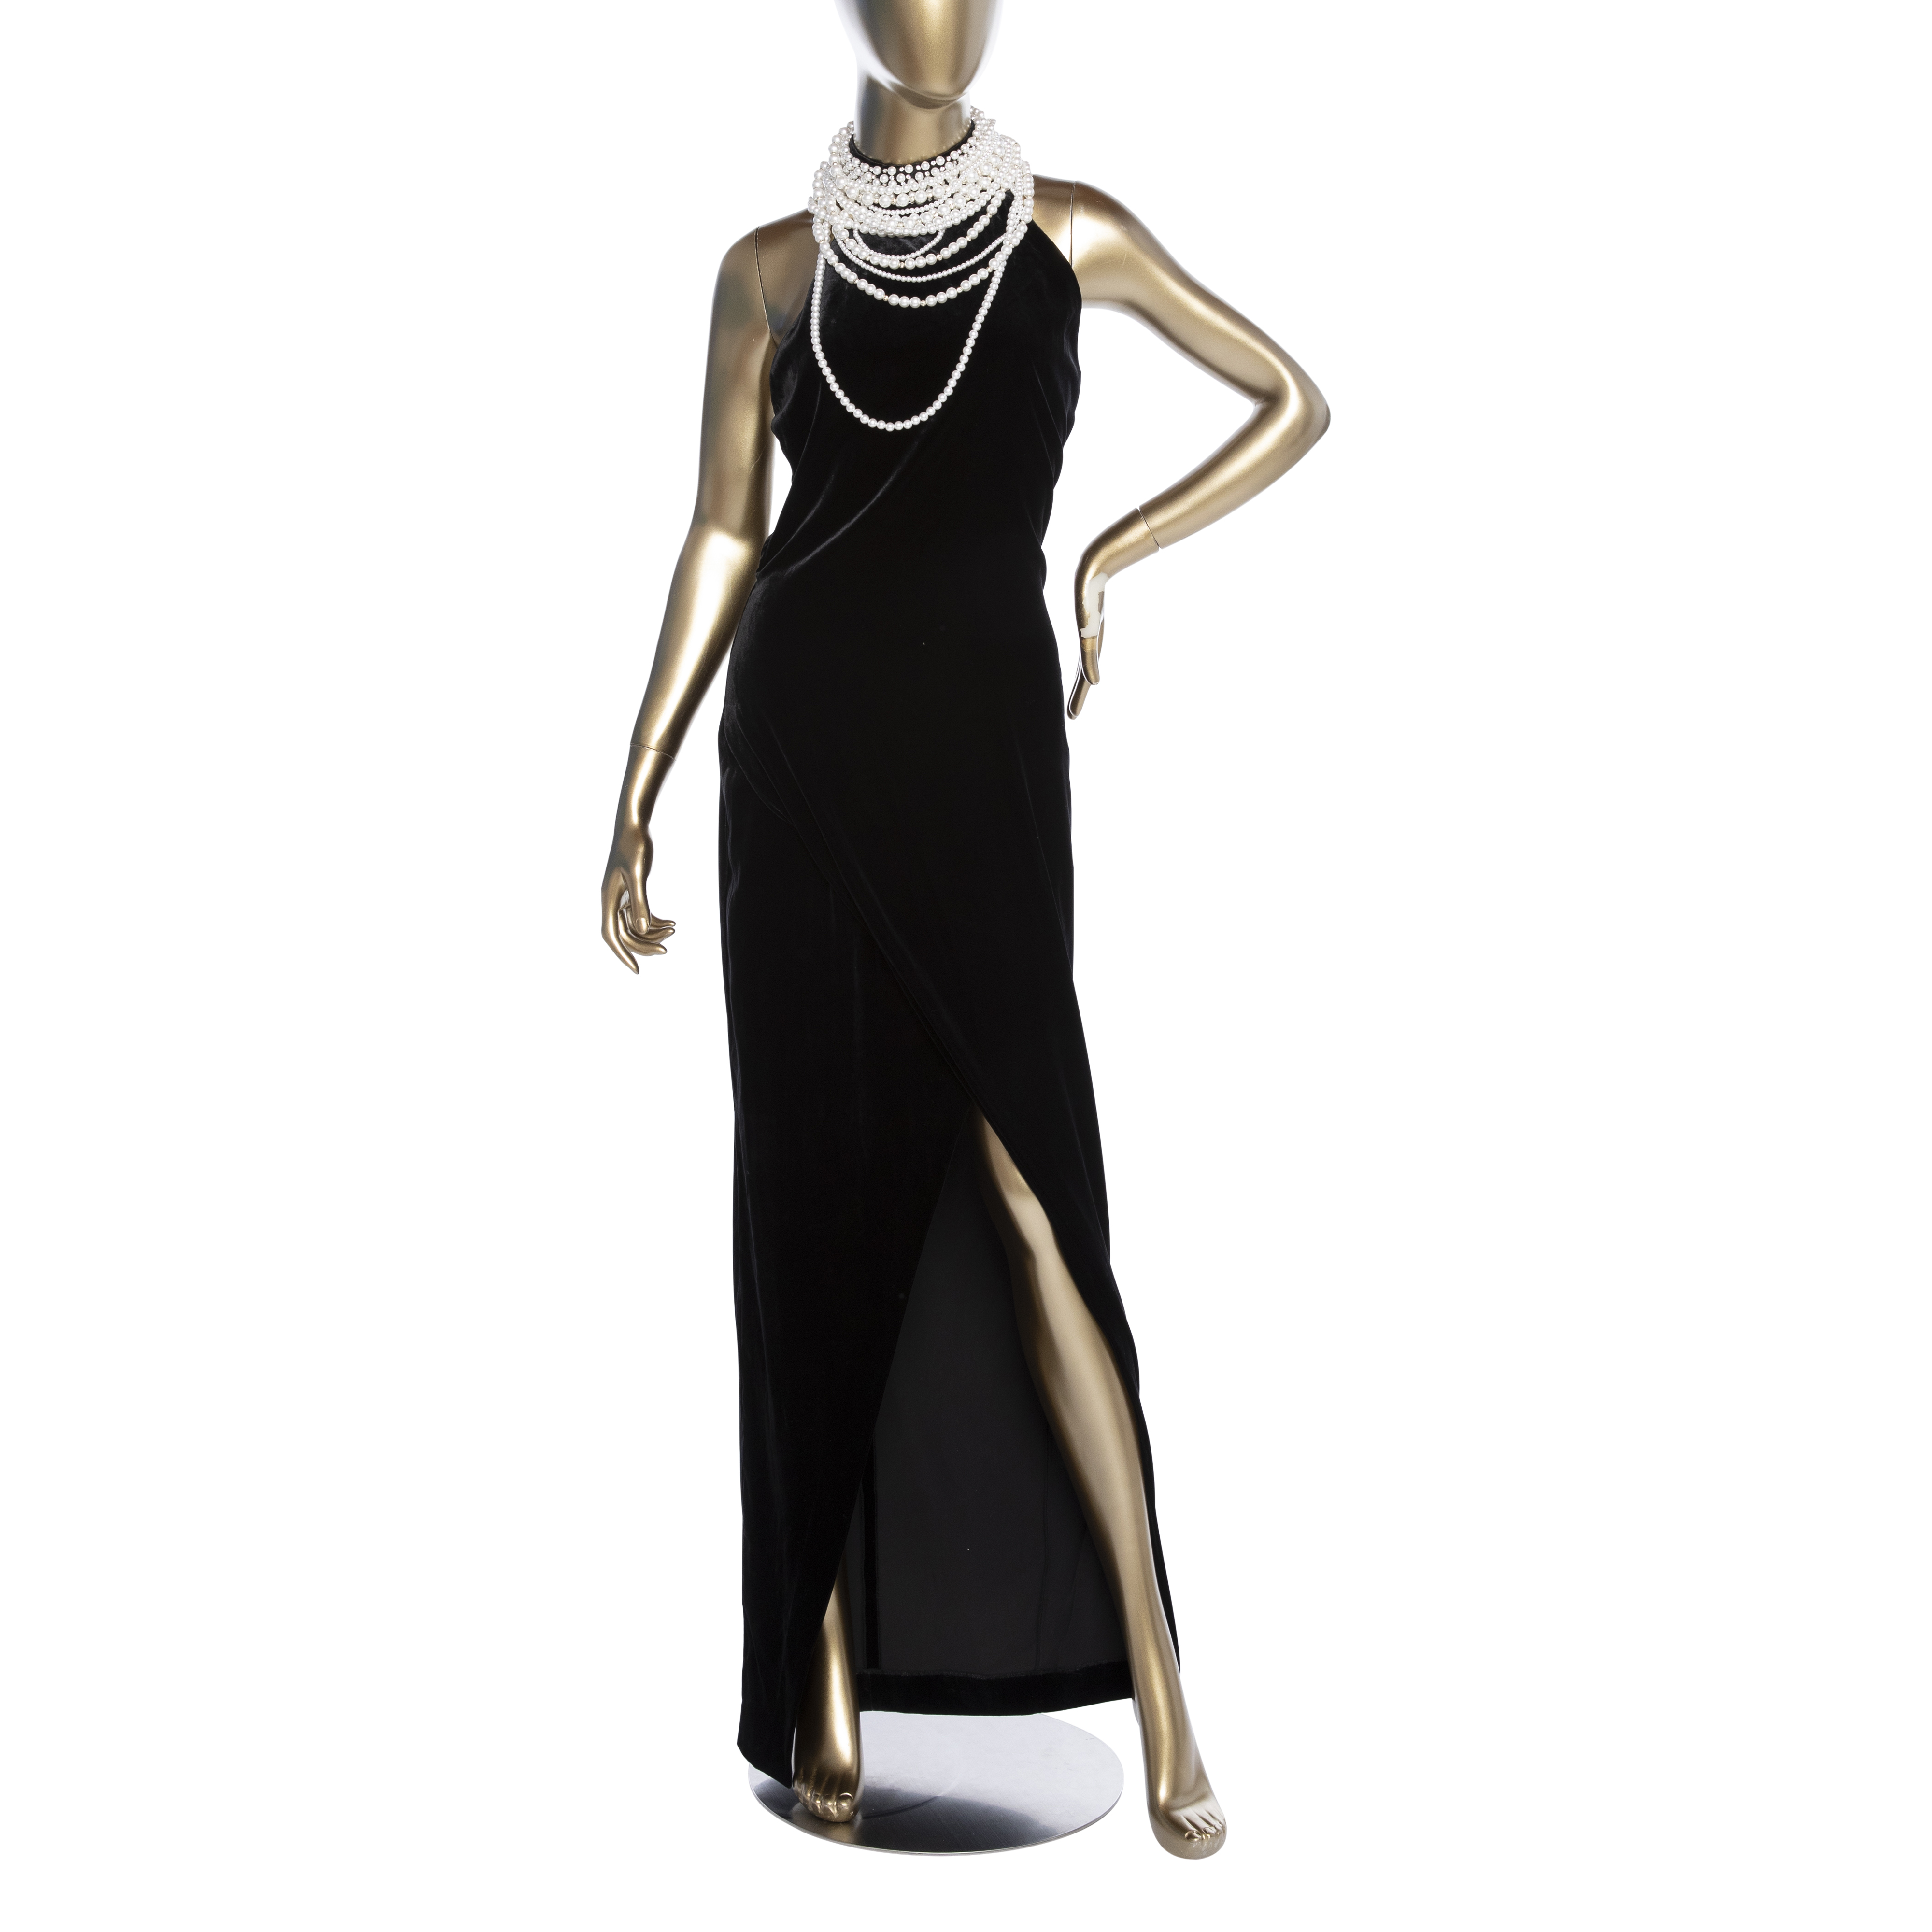 Pearl-embellished velvet gown in black - Balmain